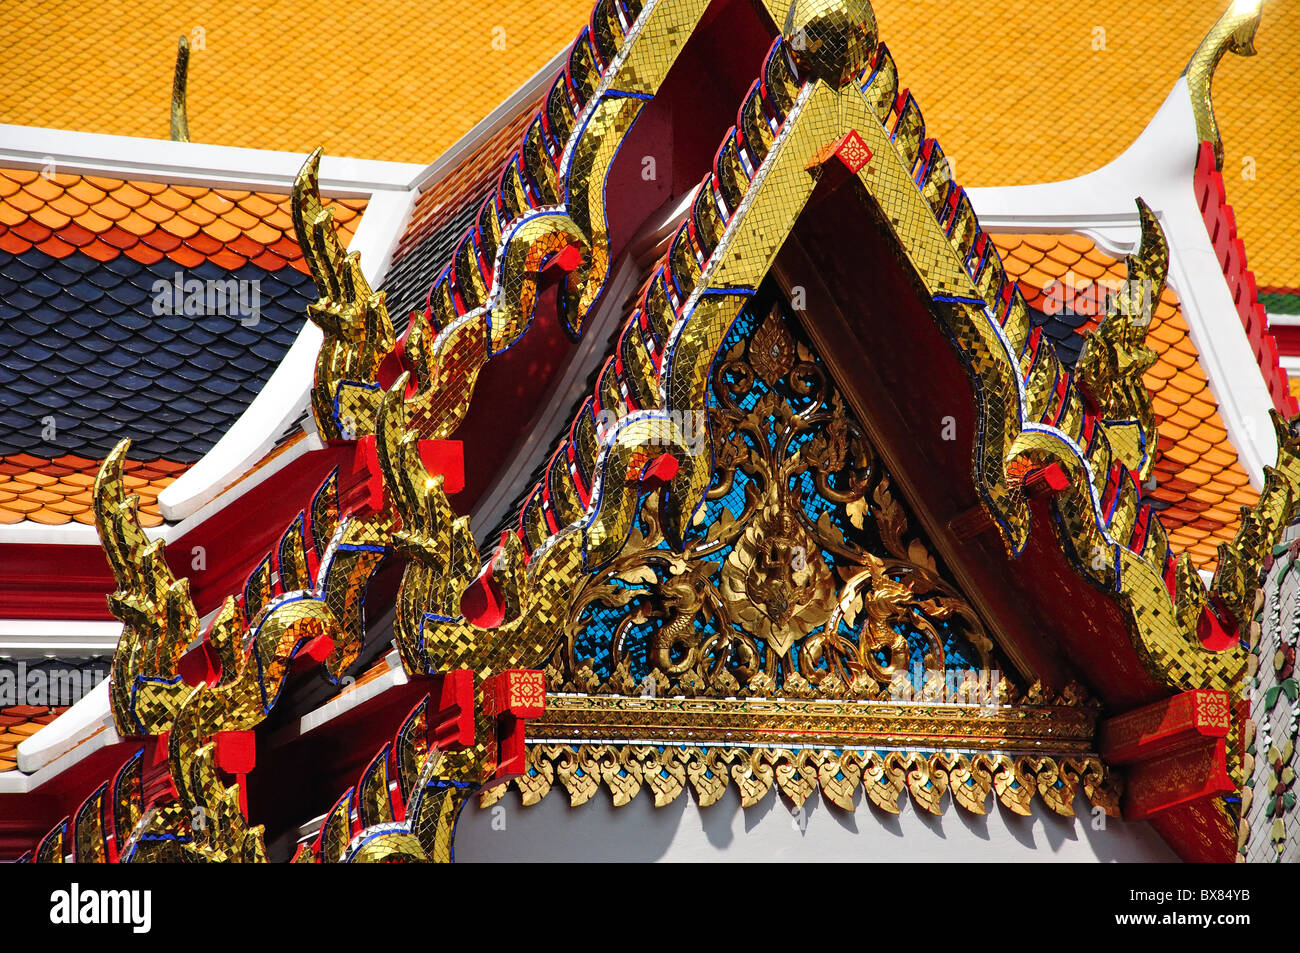 Façade décorative de Wat Pho, Temple de l'île Rattanakosin, Bangkok, Thaïlande Banque D'Images